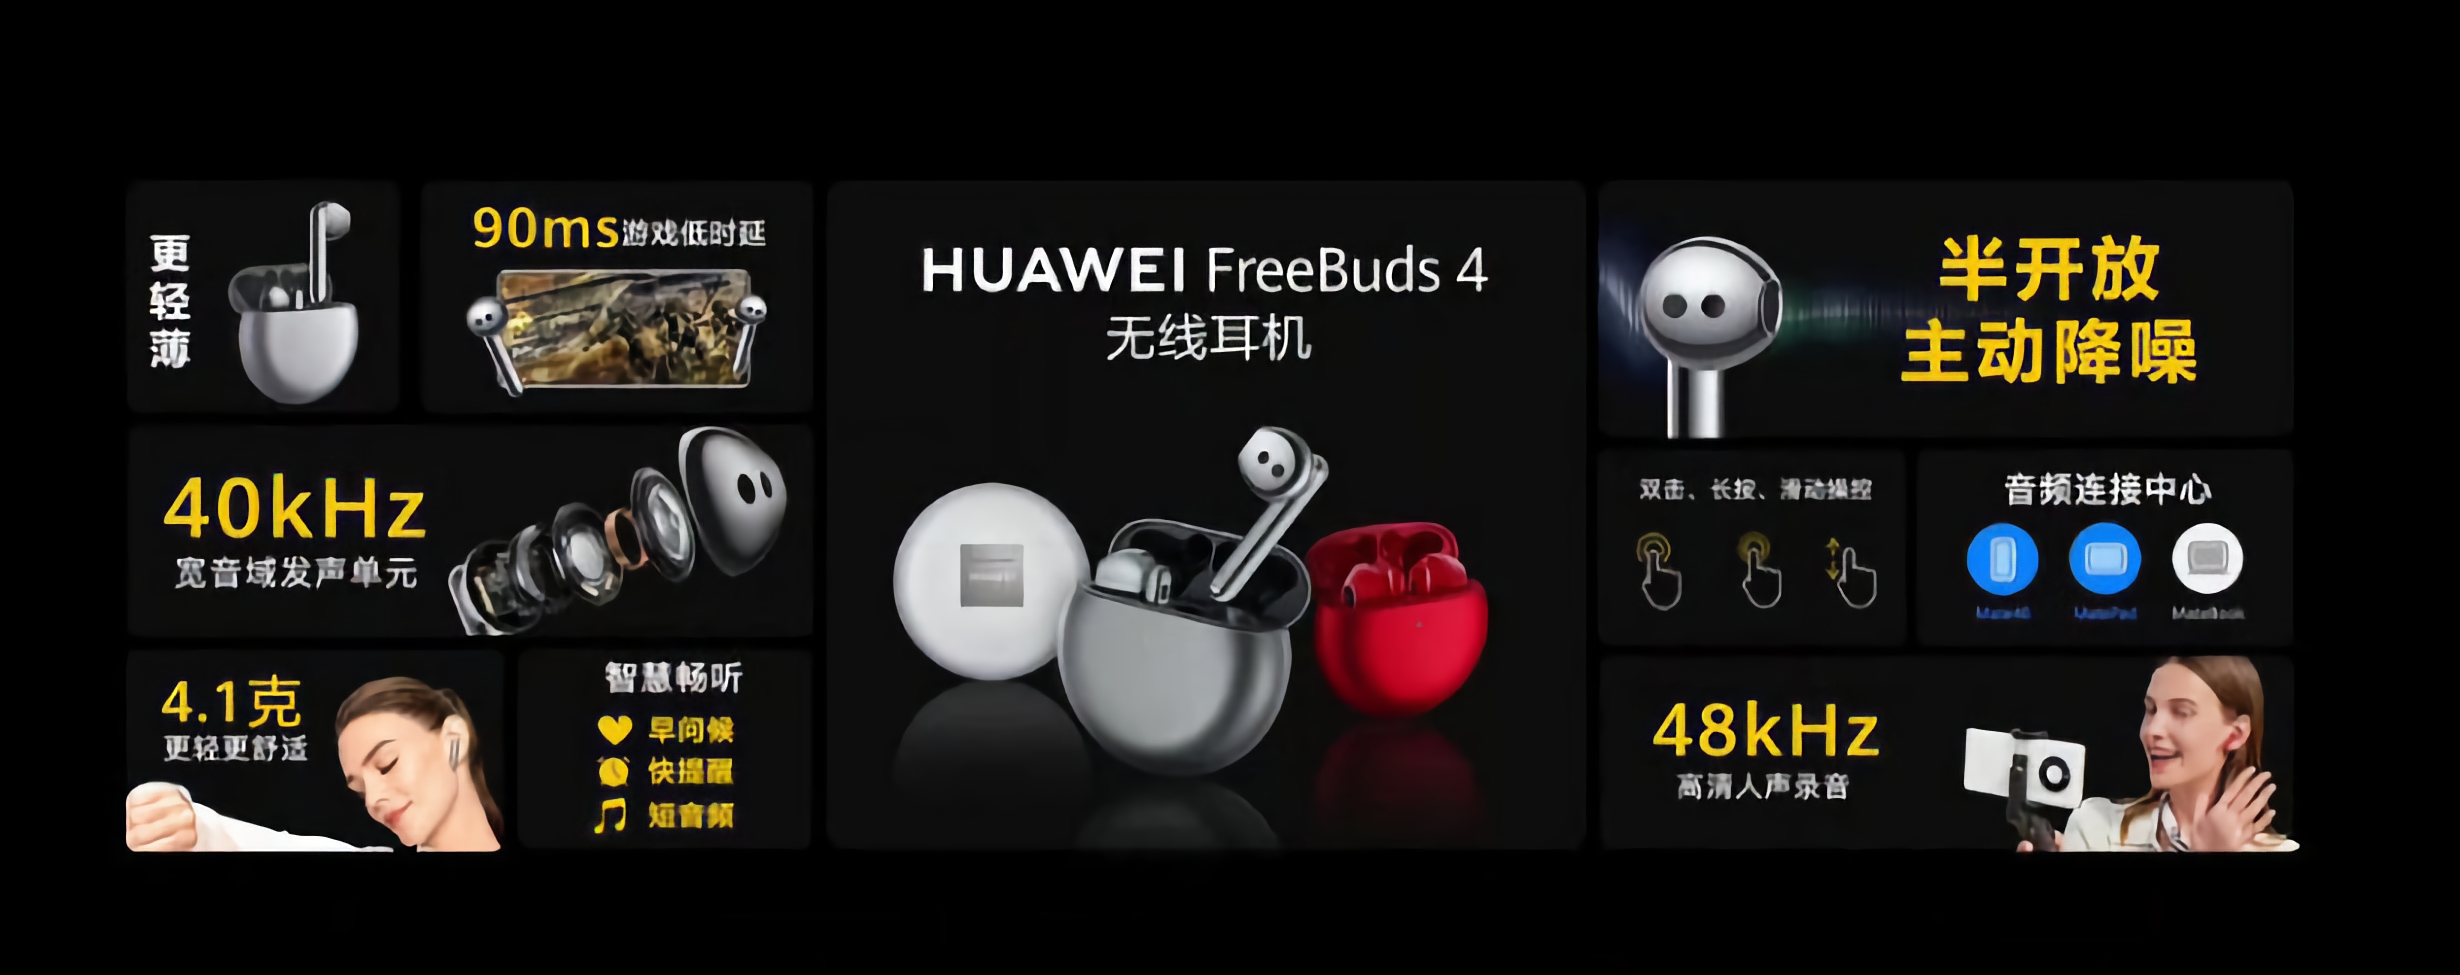 Huawei freebuds pro сравнение. TWS Huawei freebuds 4. Huawei freebuds 4 беспроводная зарядка. Беспроводные наушники вкладыши Huawei freebuds 4. Huawei freebuds 4 шумоподавление.